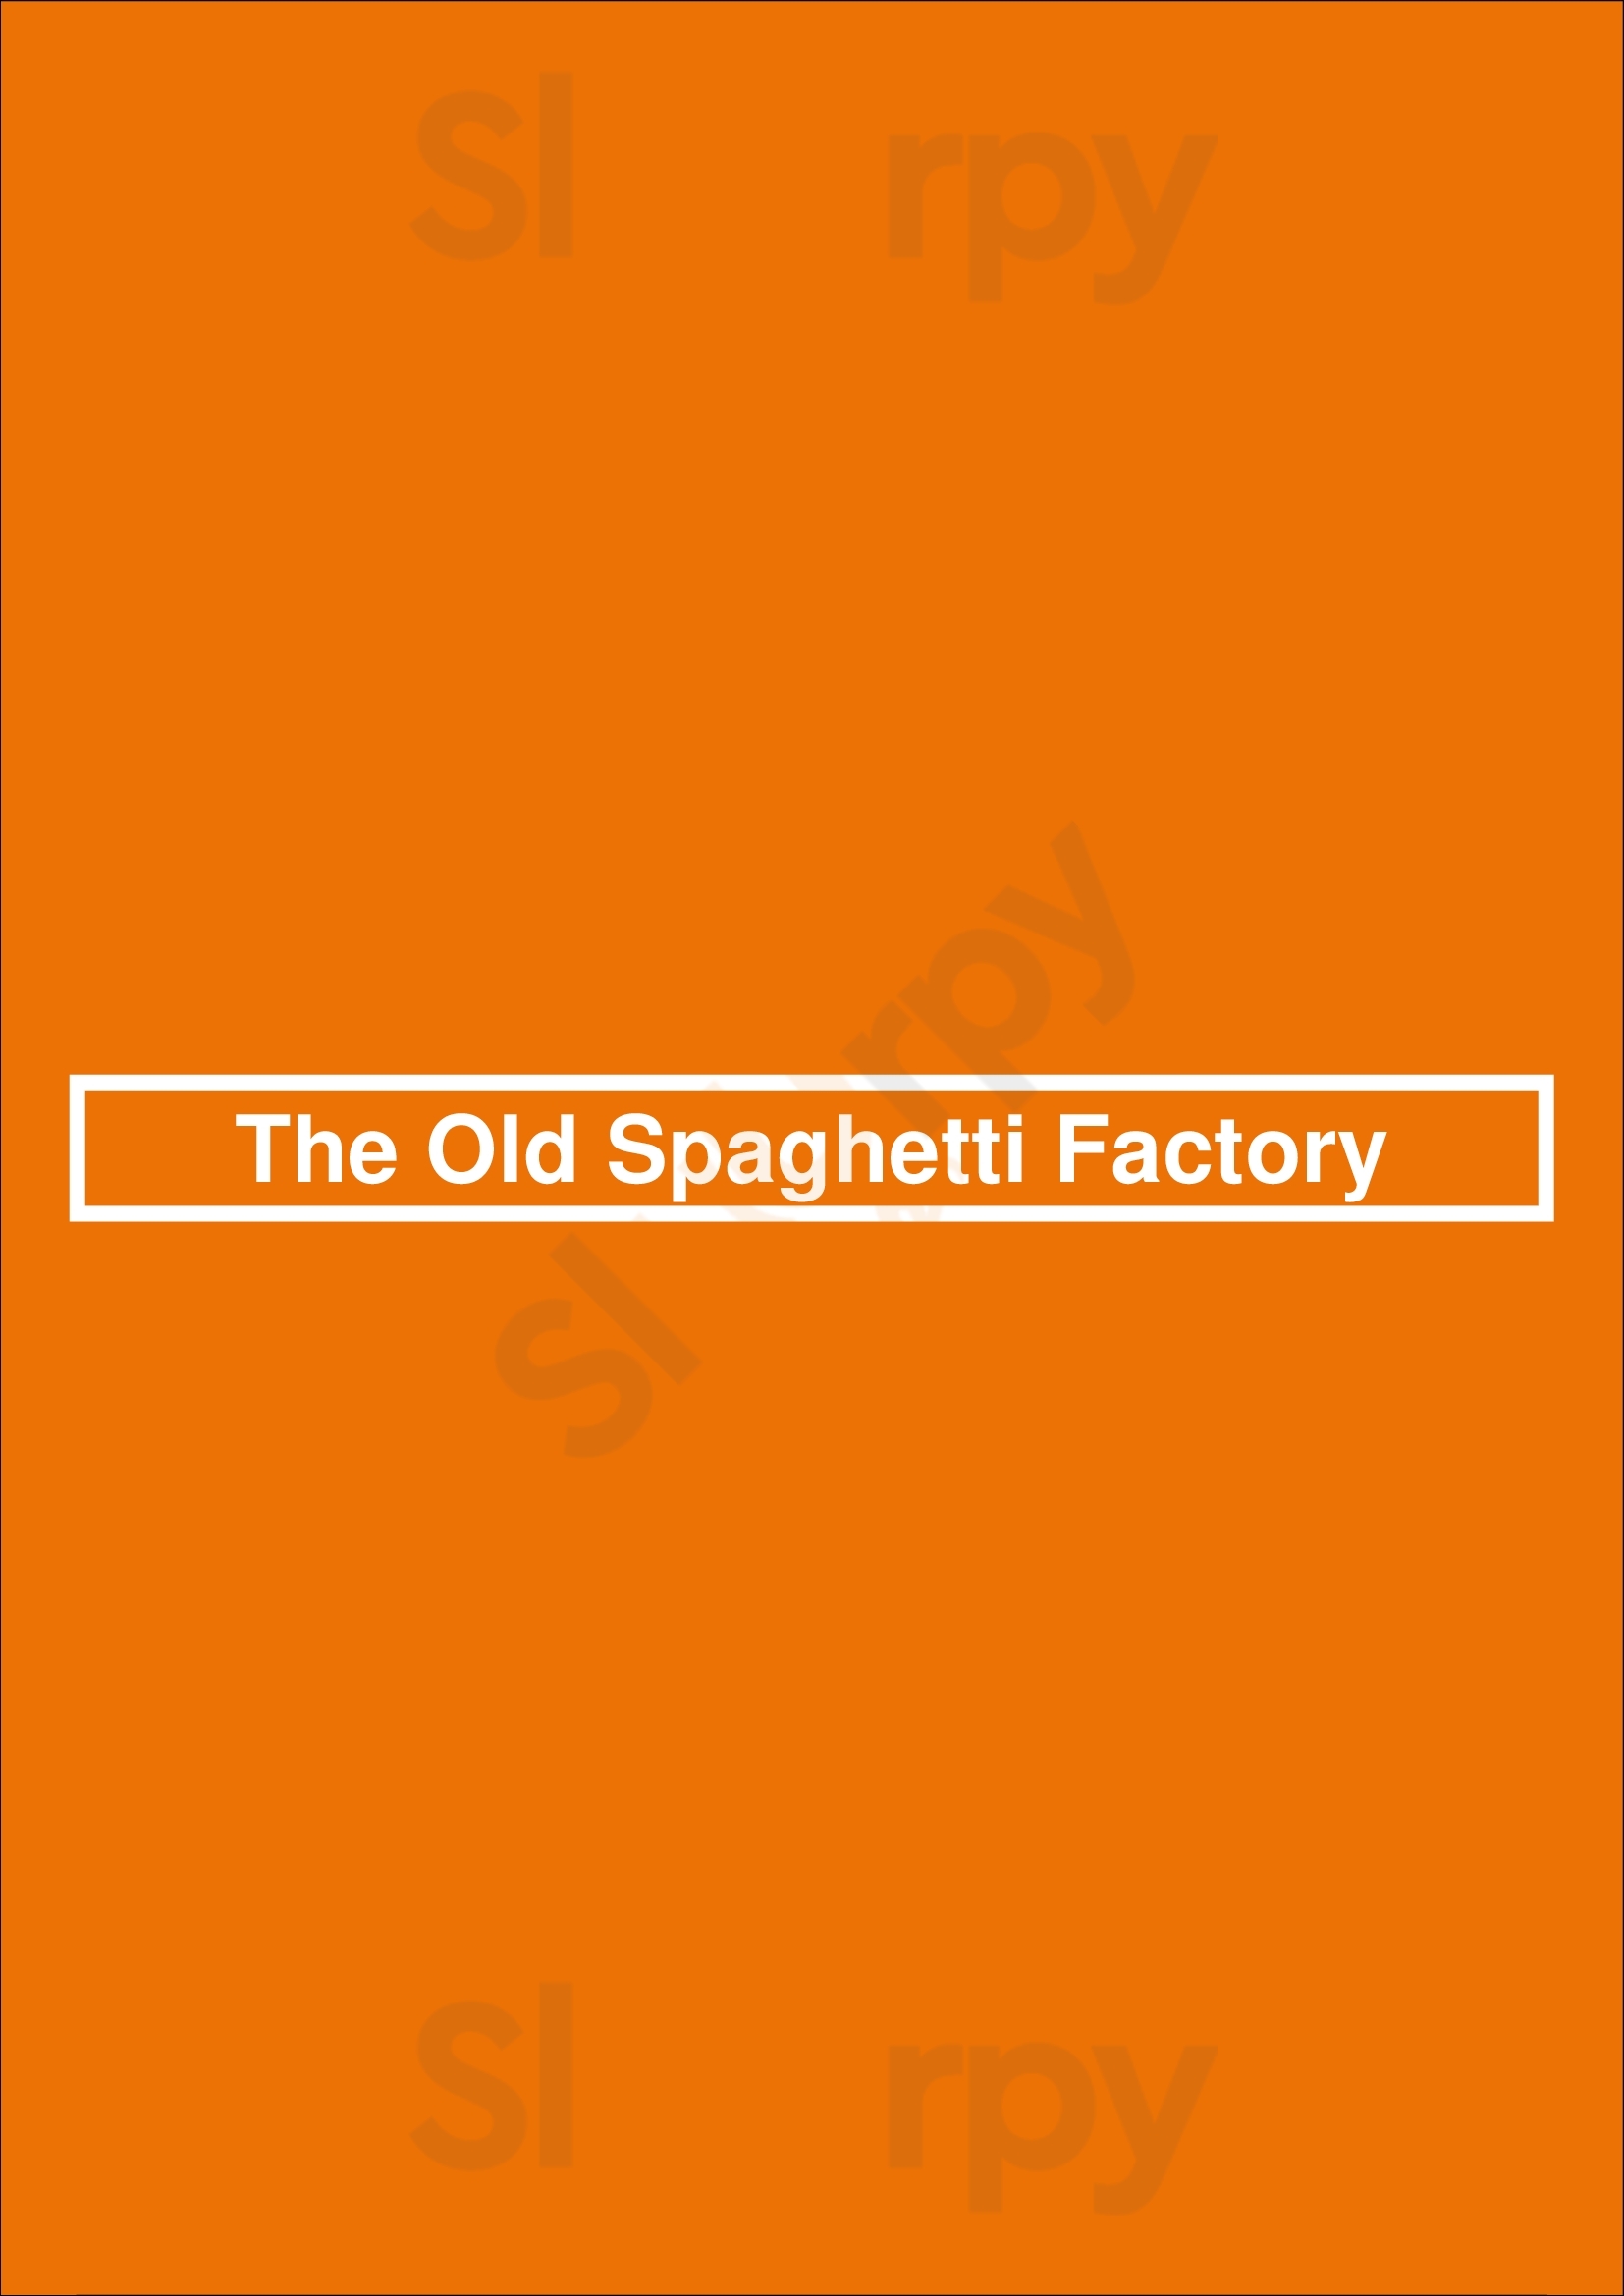 The Old Spaghetti Factory San Jose Menu - 1